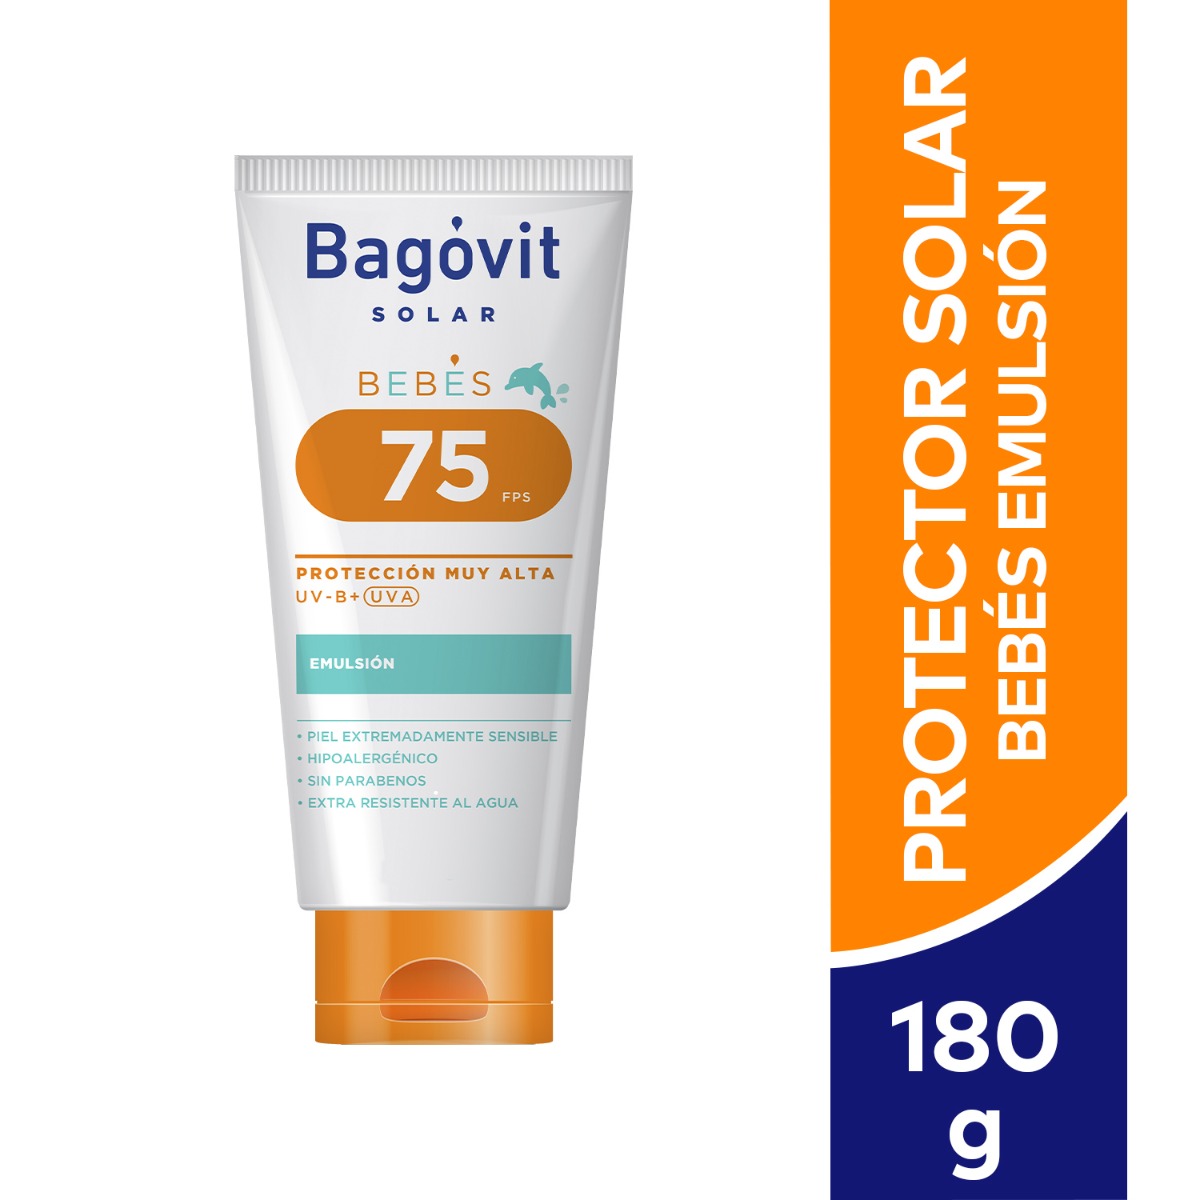 Bagovit Solar Infants Emulsion FPS75 - Photostability, UVA/UVB Protection & Anti-Aging Benefits 180Ml / 6.08Fl Oz